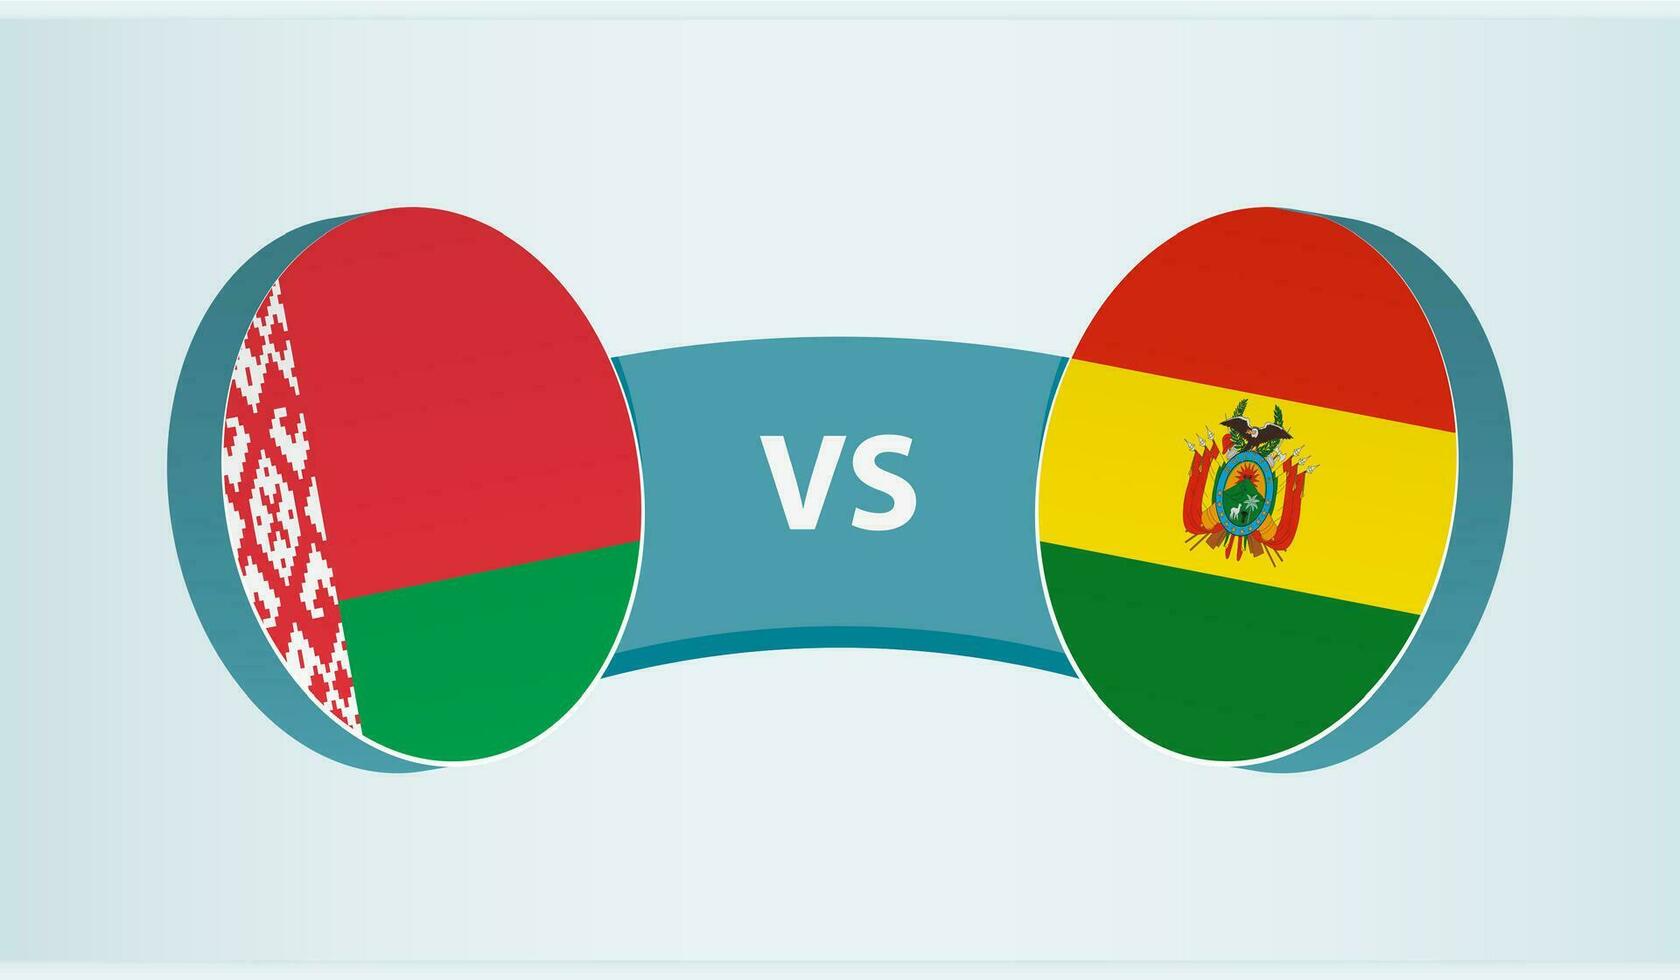 Belarus versus Bolivia, team sports competition concept. vector